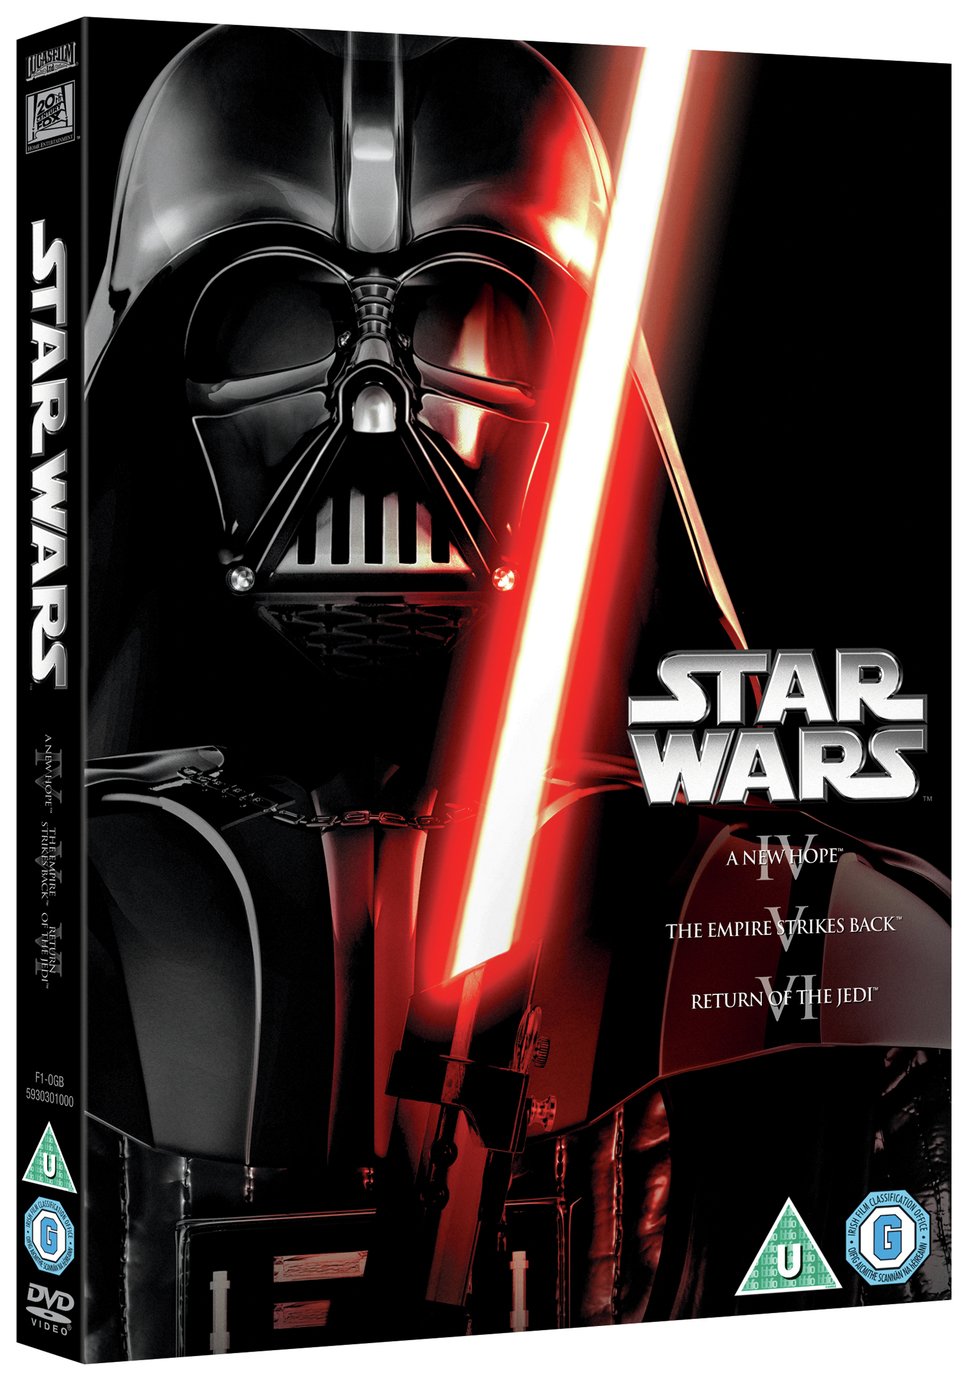 Star Wars: The Original Trilogy DVD Box Set Review